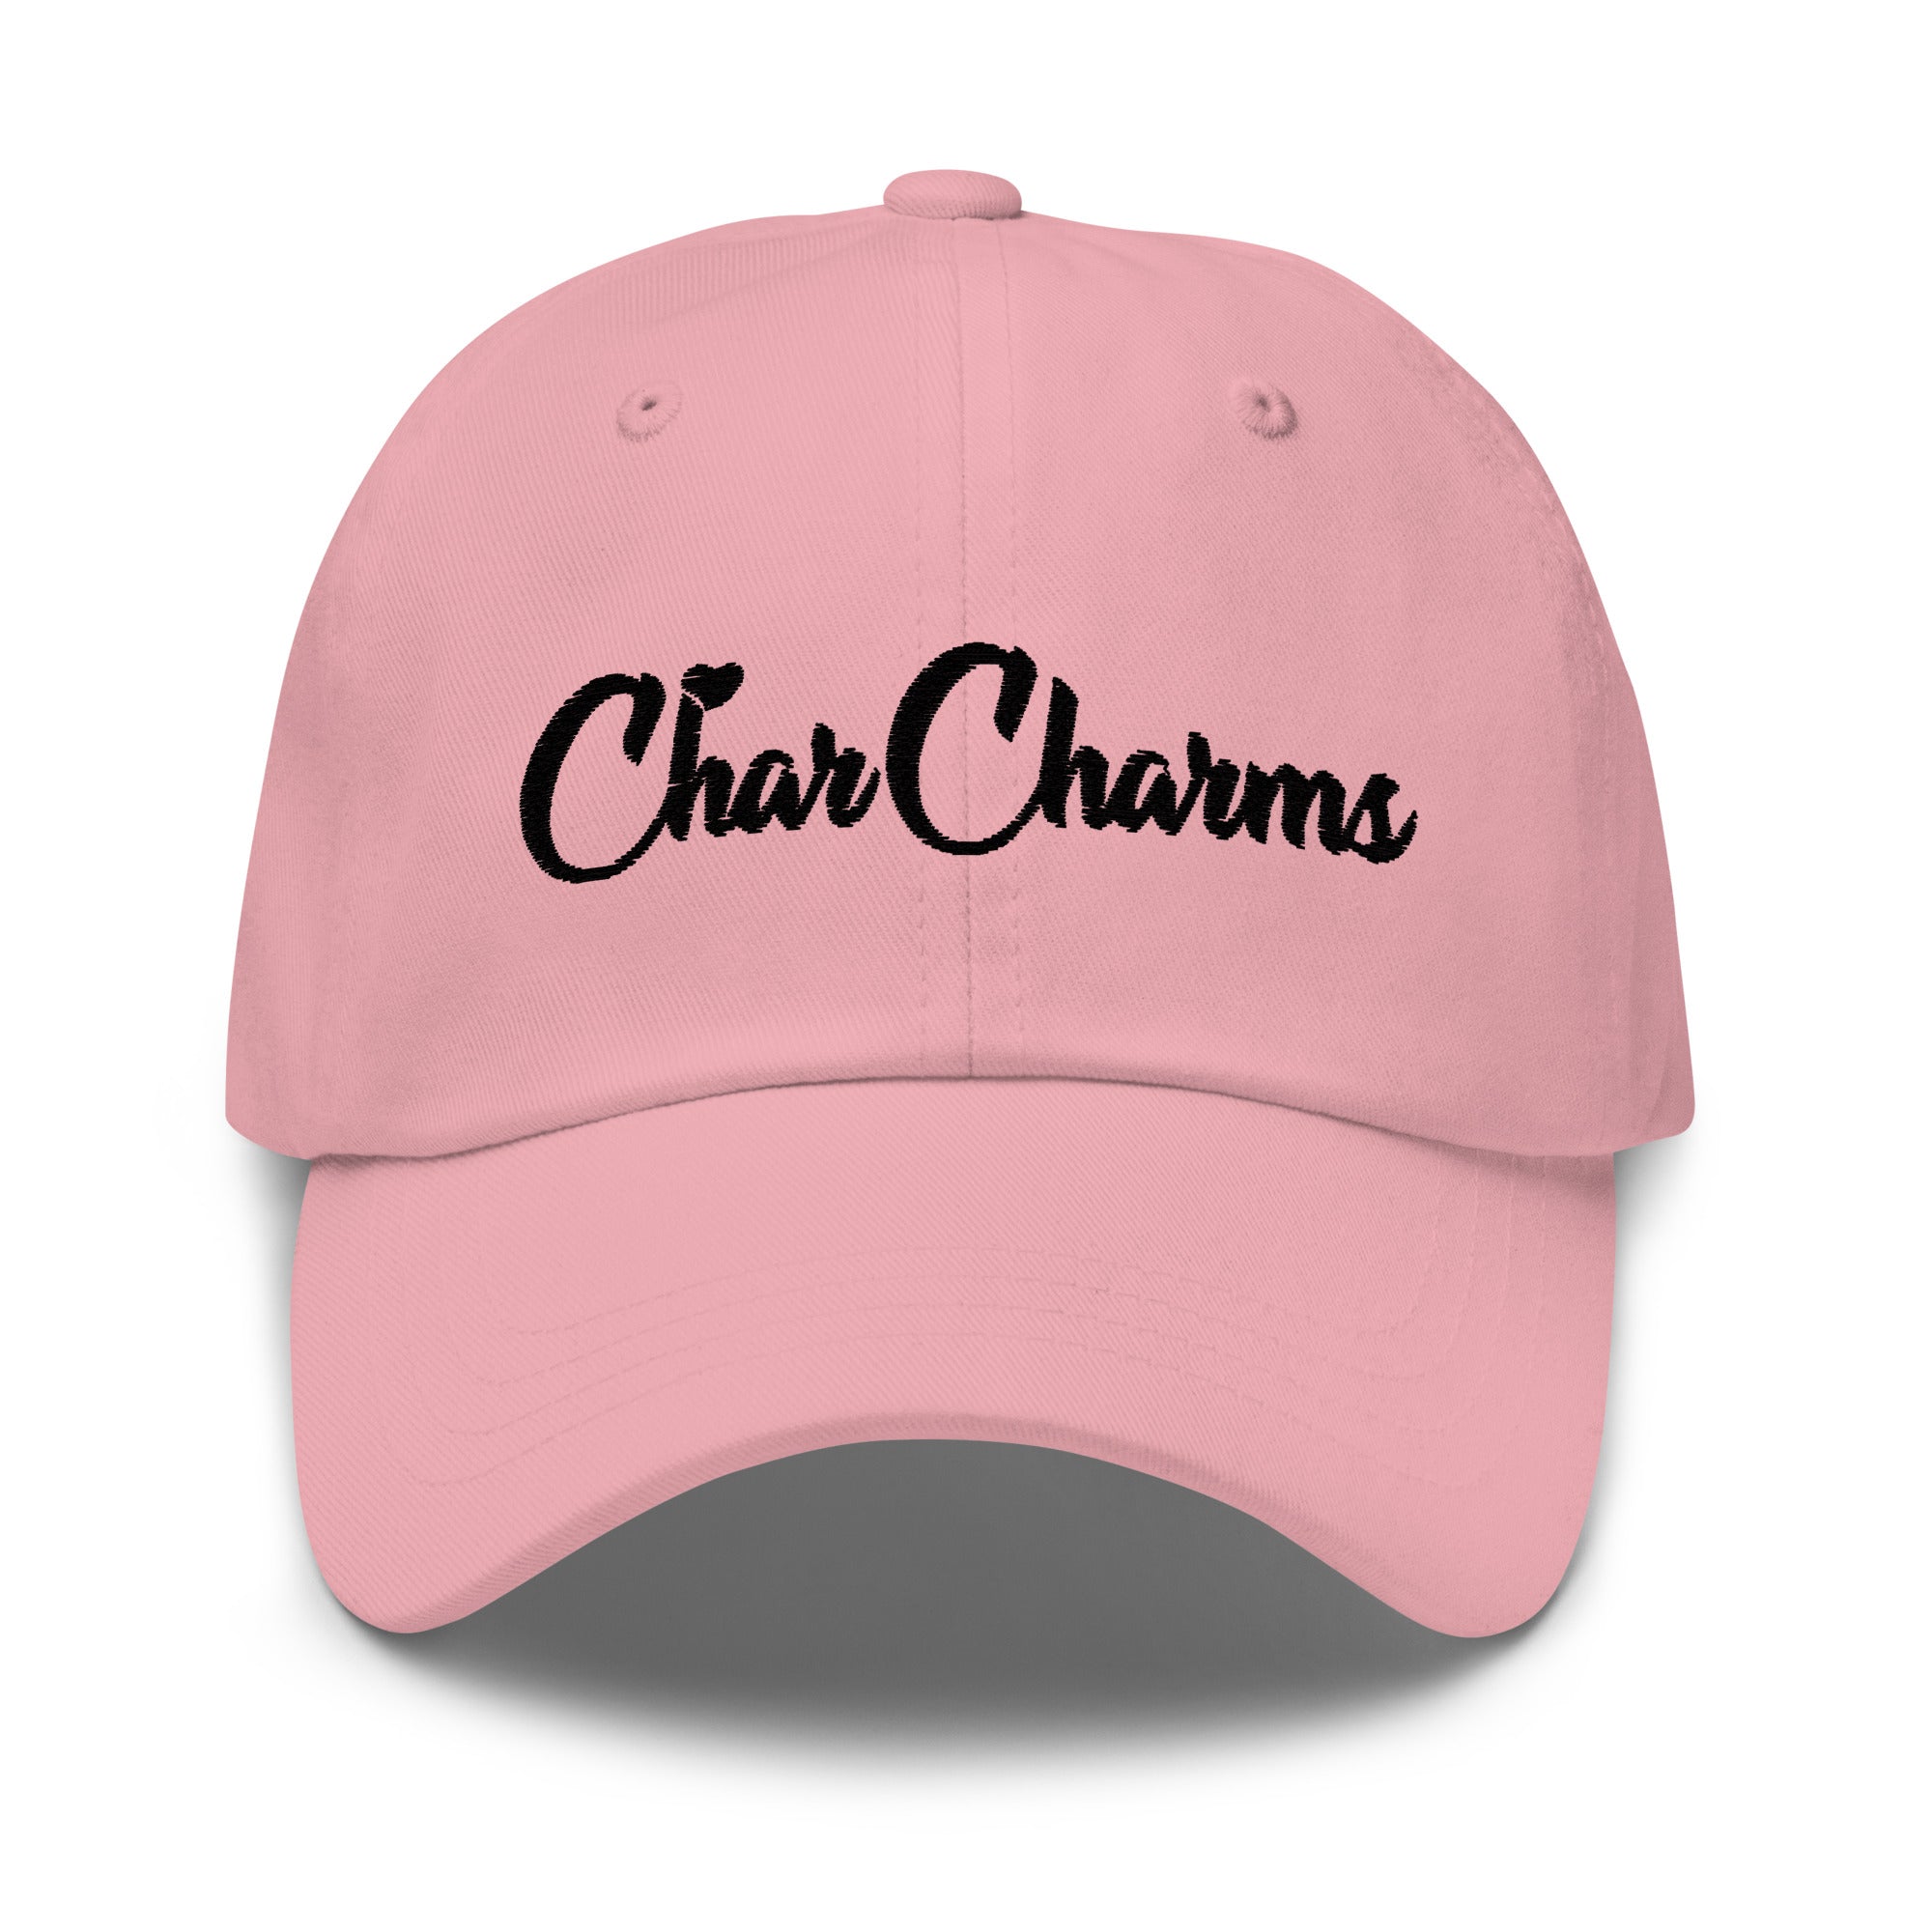 CharCharms Merchandise Baseball Cap